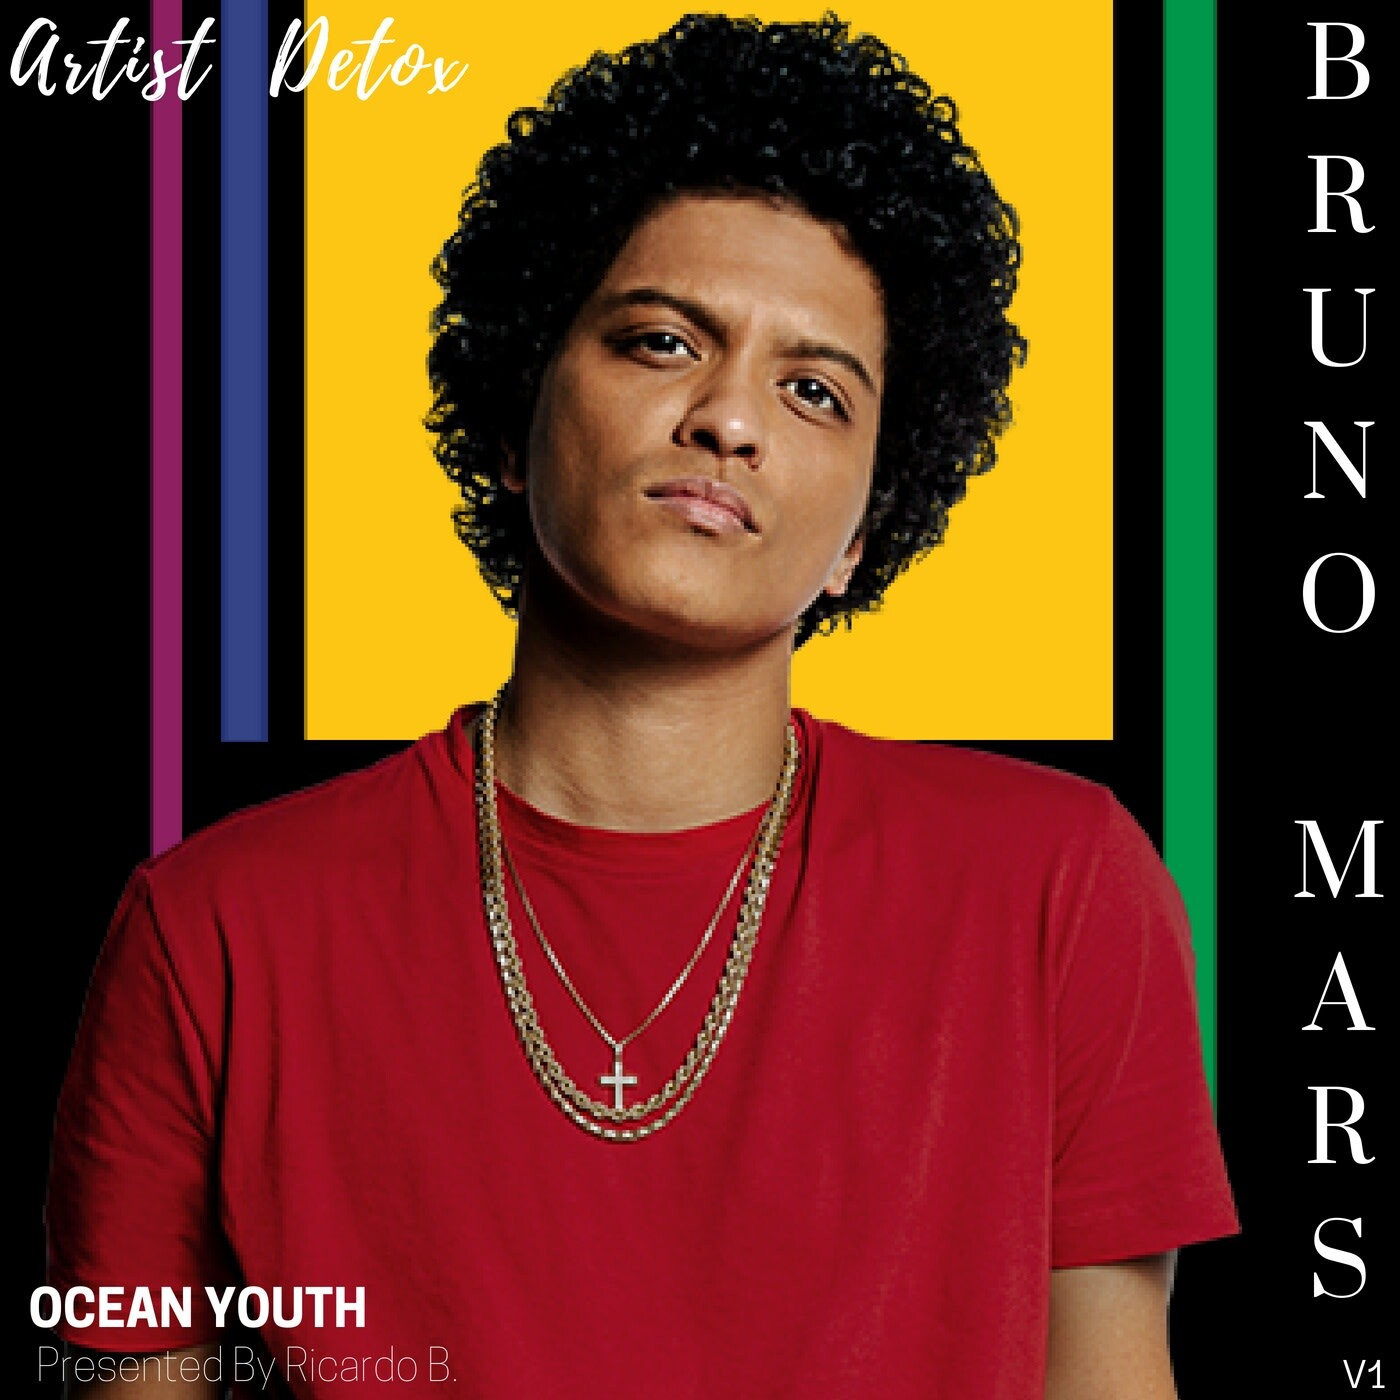 Bruno Mars, Artist